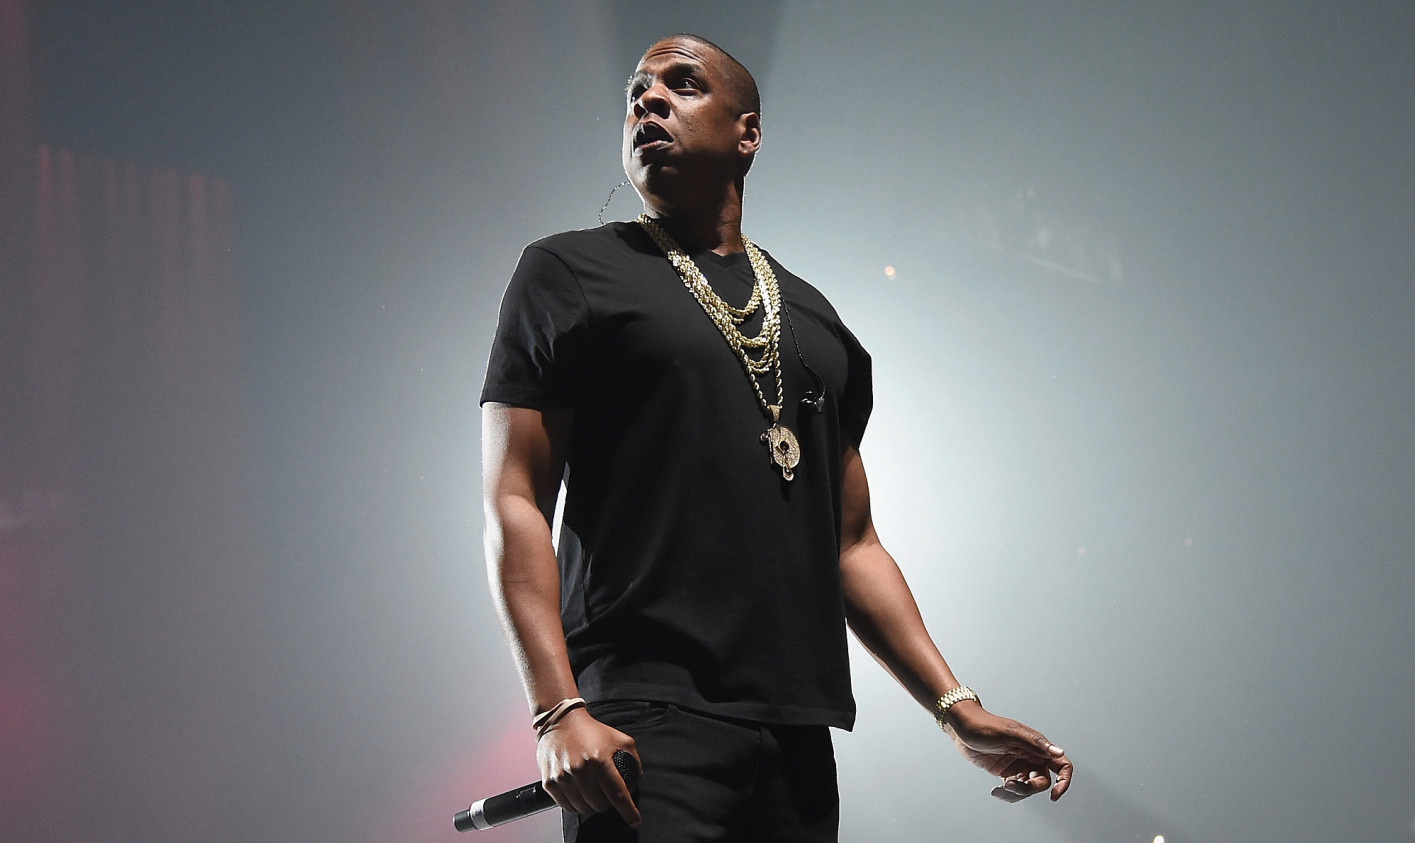 Jay-Z celebra sus 50 años, regresando su catálogo musical a Spotify. Cusica Plus.